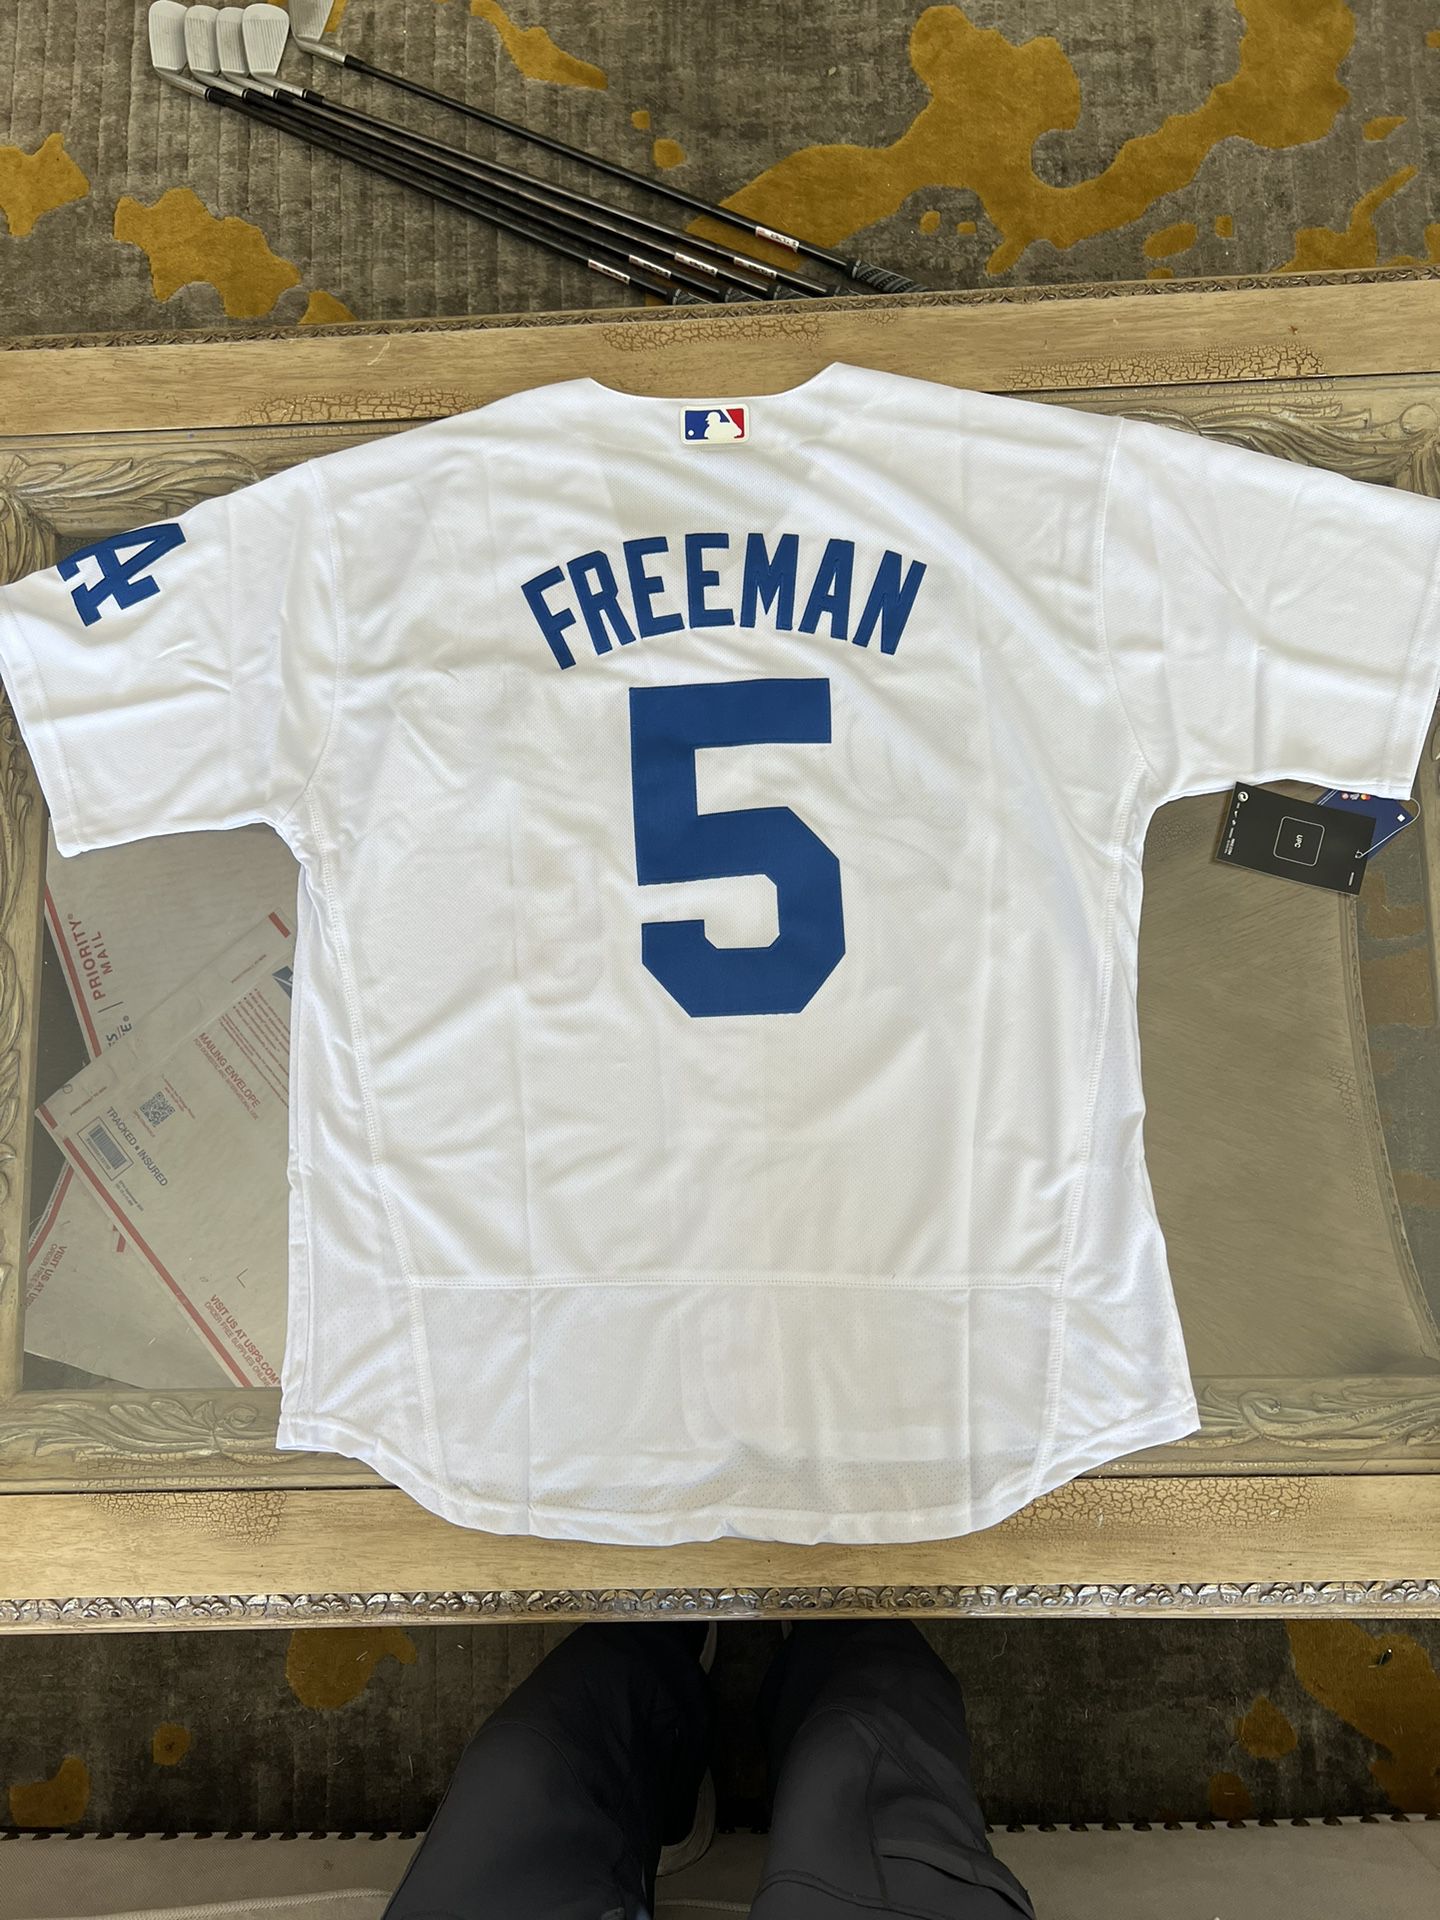 DODGERS Freddie Freeman jersey for Sale in Ontario, CA - OfferUp